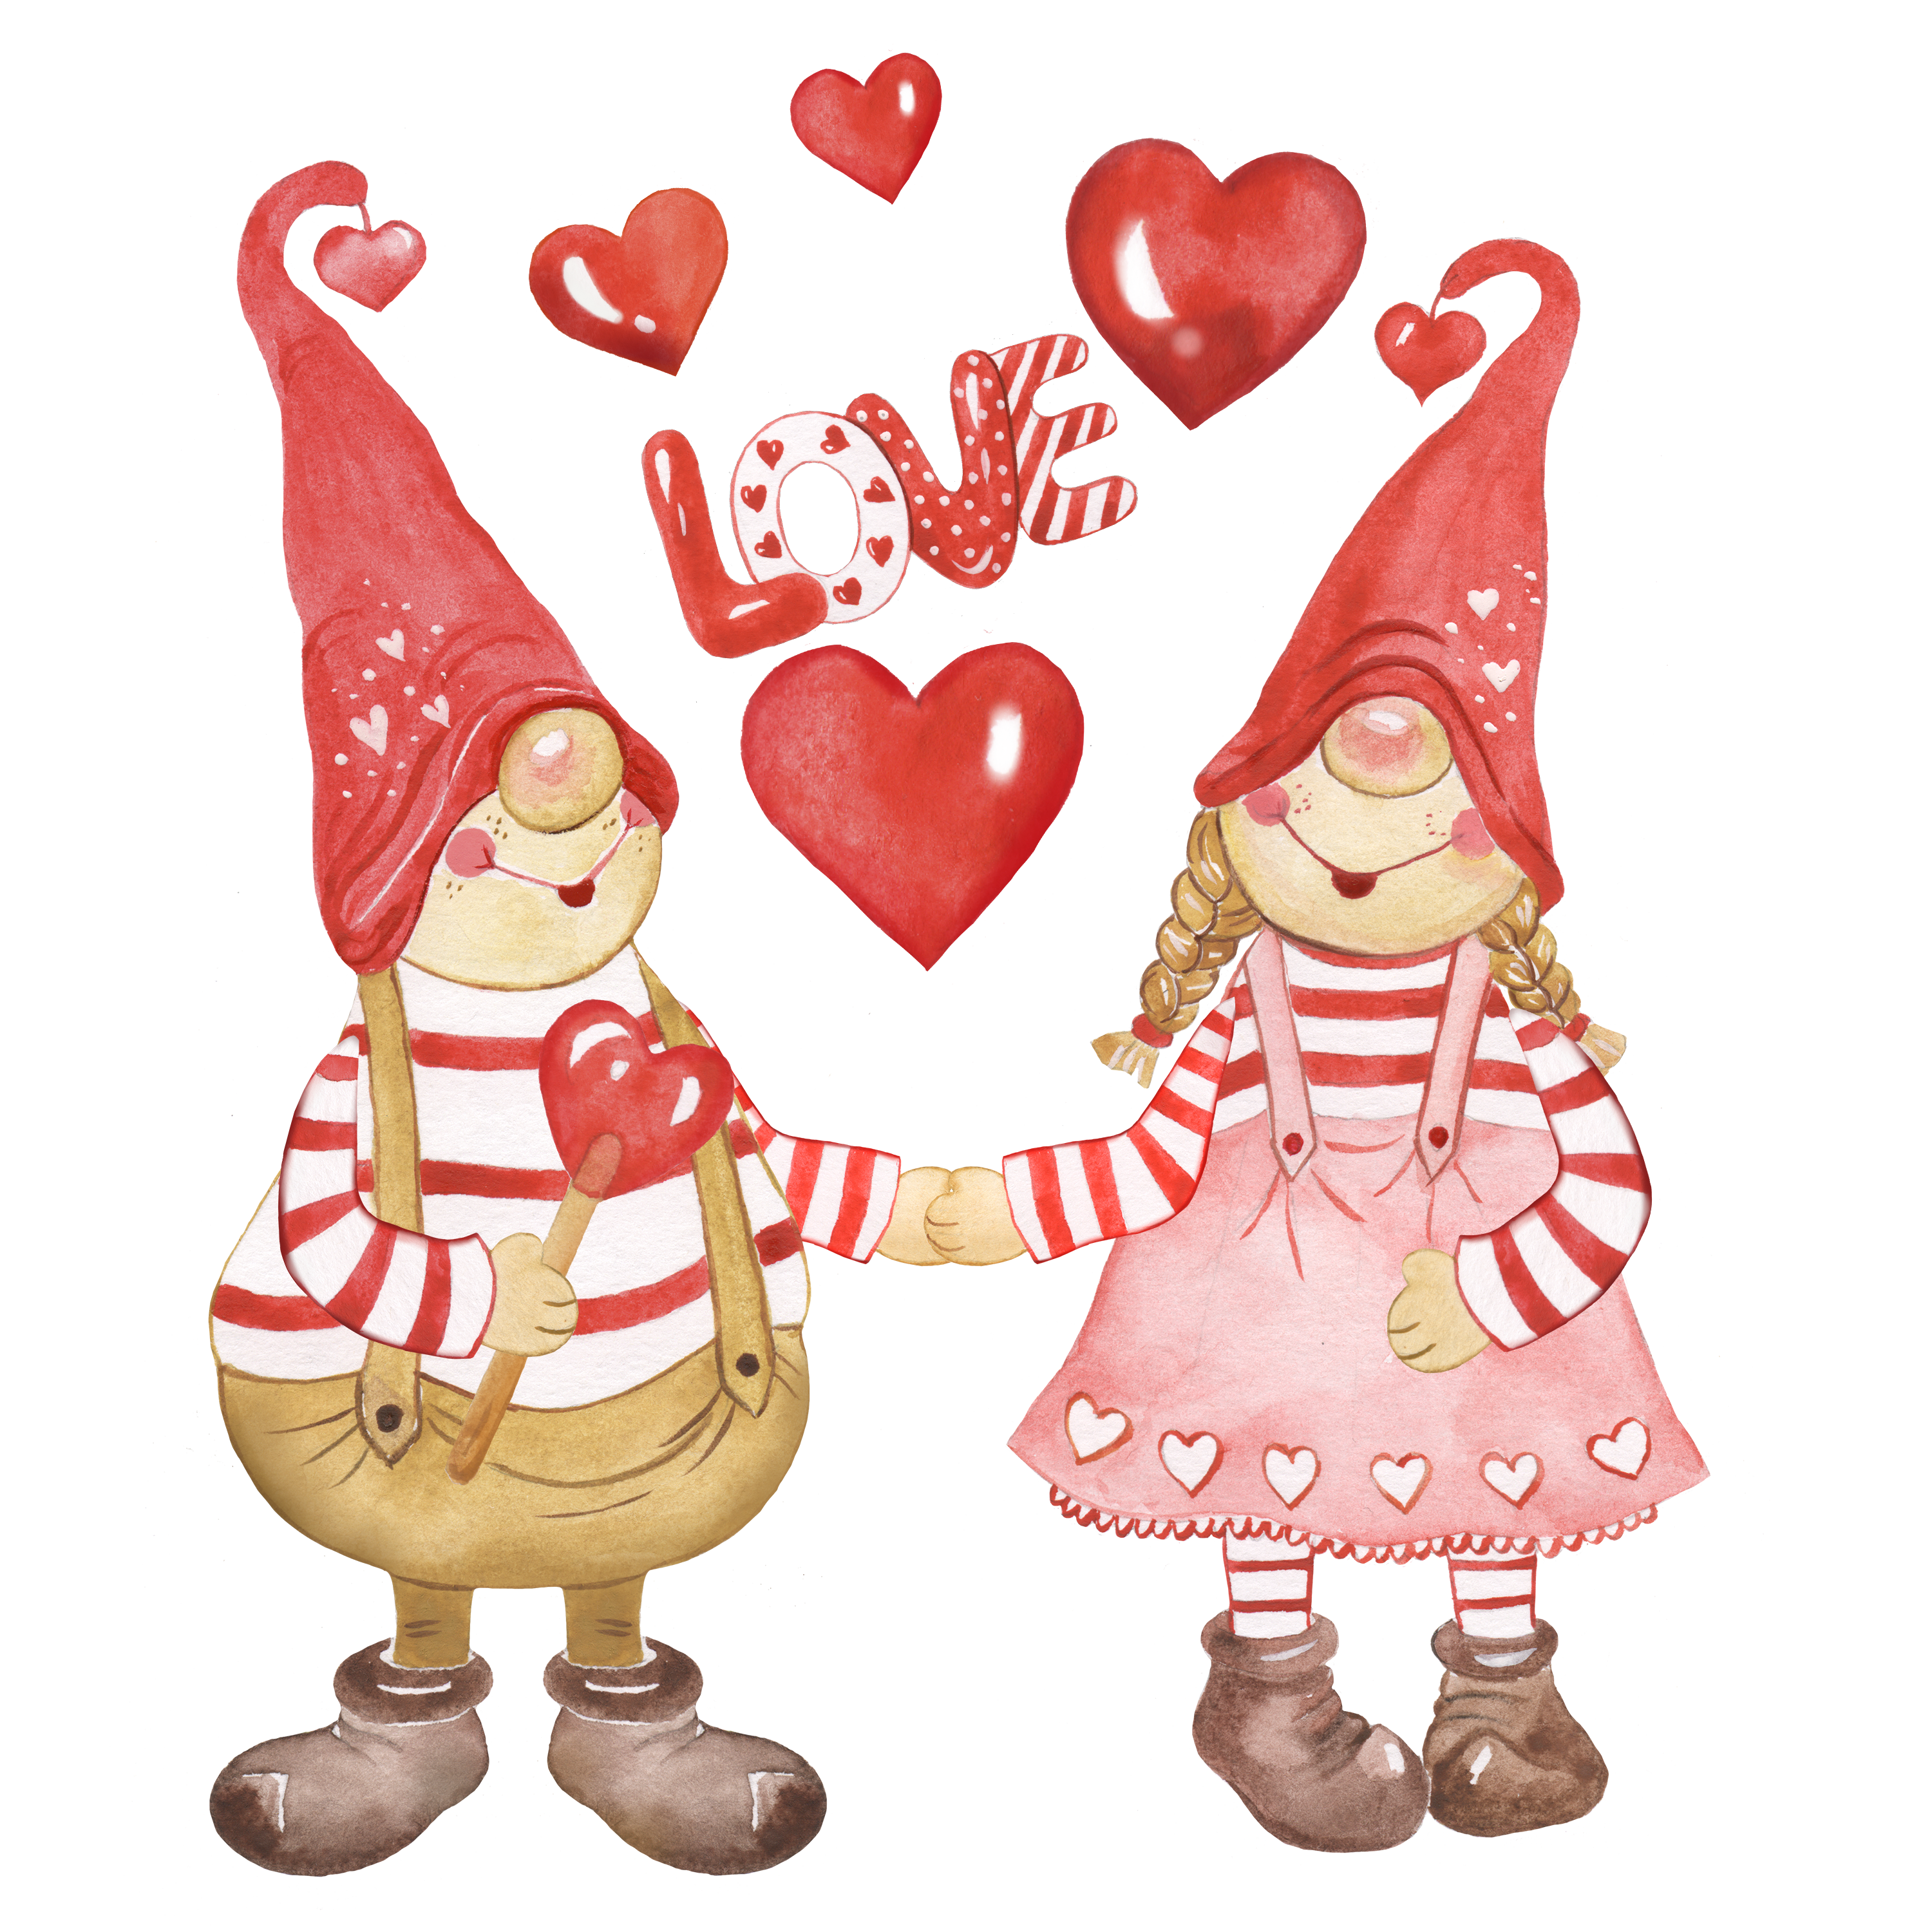 Valentine Gnome Envelopes Background Wallpaper Image For Free Download   Pngtree